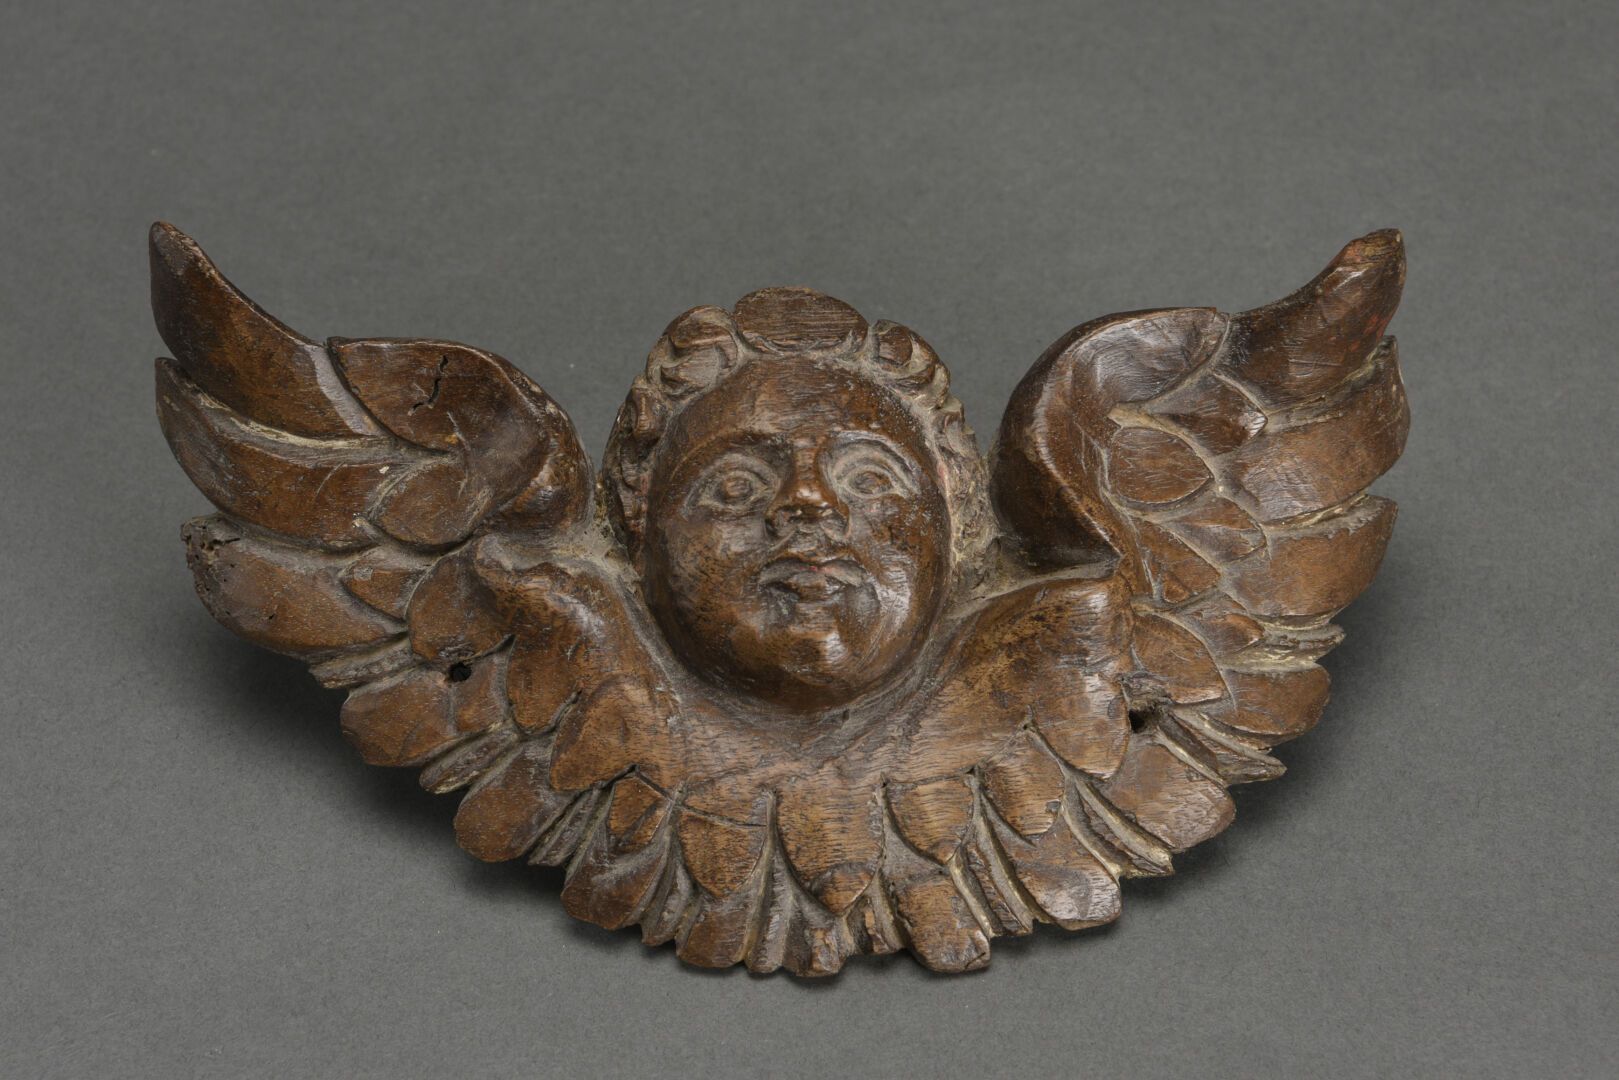 Null Cabeza de putto alado en madera tallada
Siglo XVIII 
H: 126 L: 2 cm